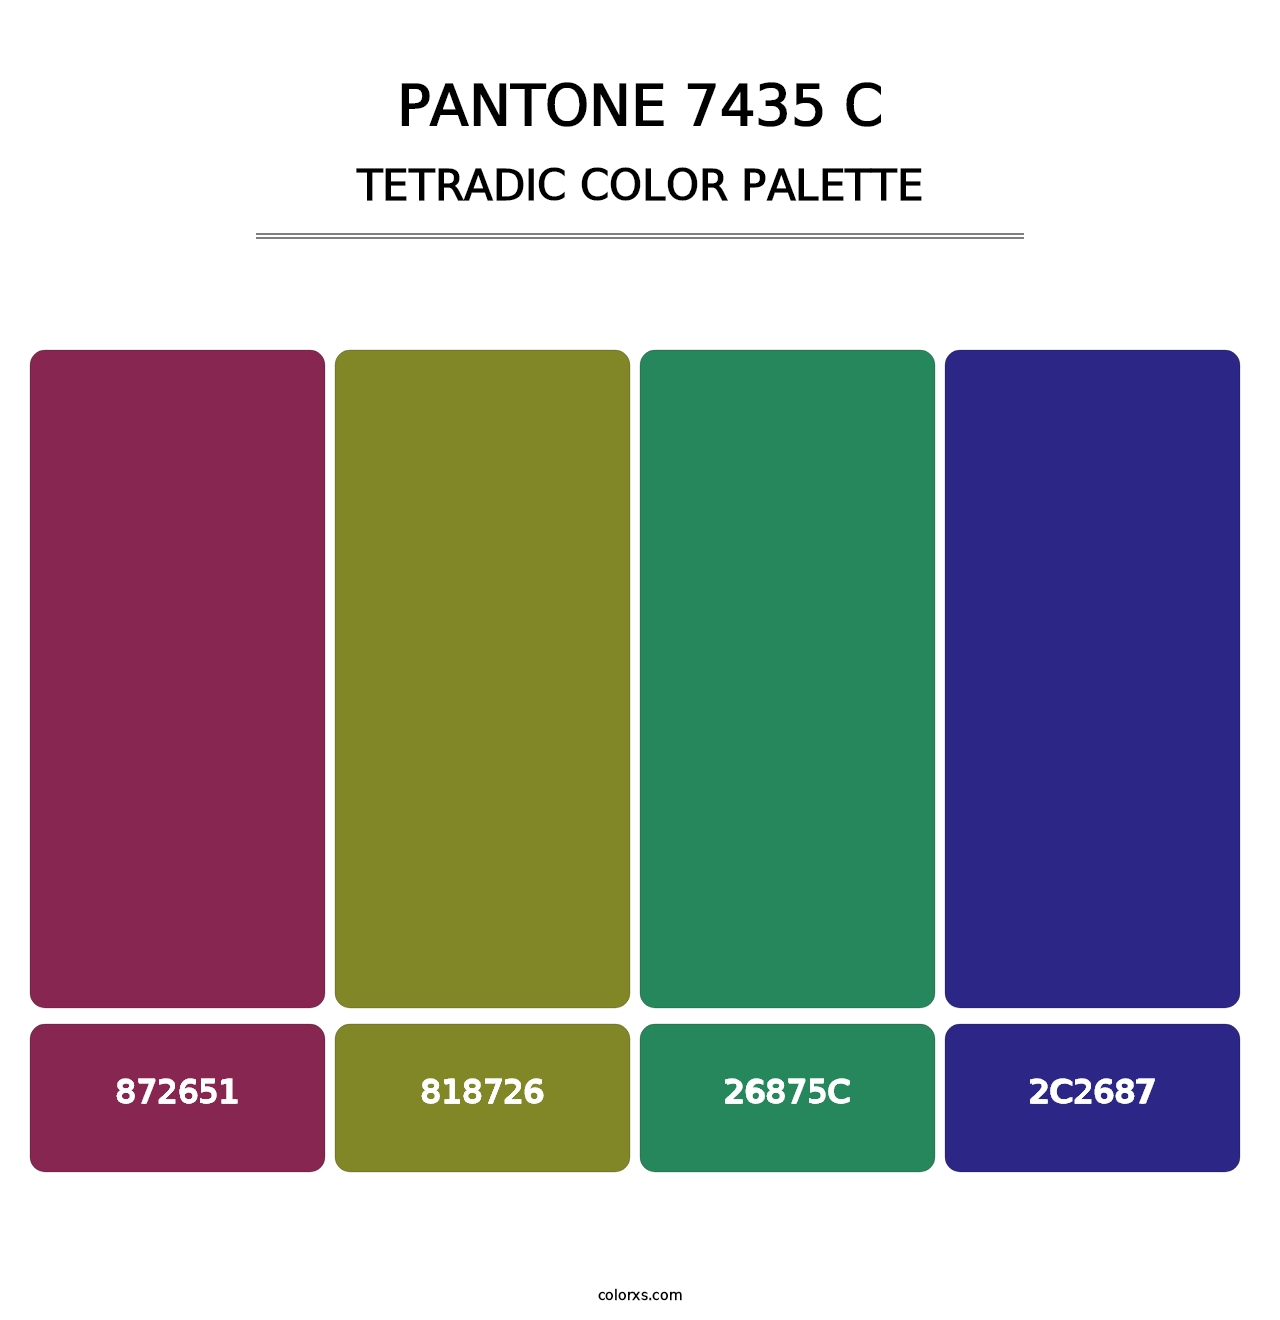 PANTONE 7435 C - Tetradic Color Palette